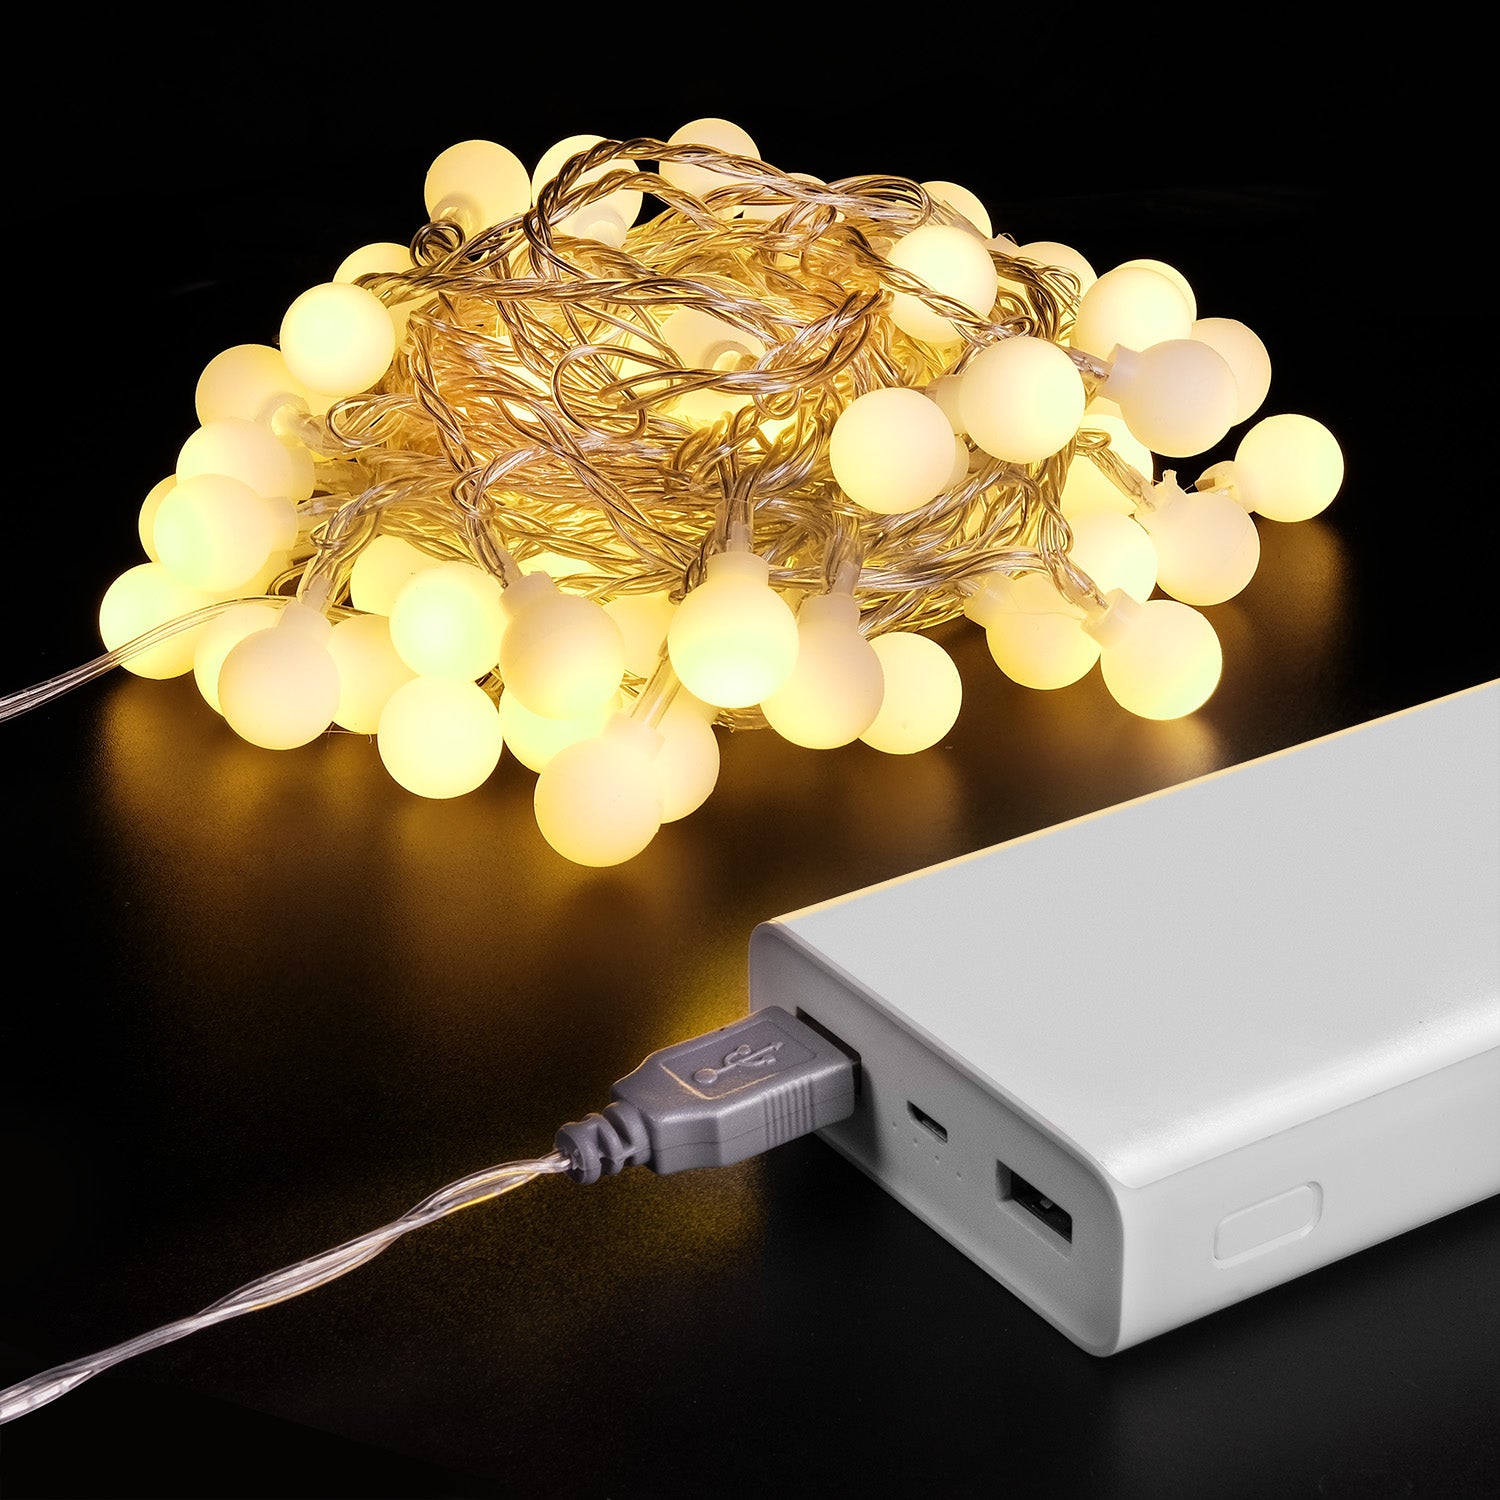 USB LED Lamp Circuit  5v USB Light for Laptop